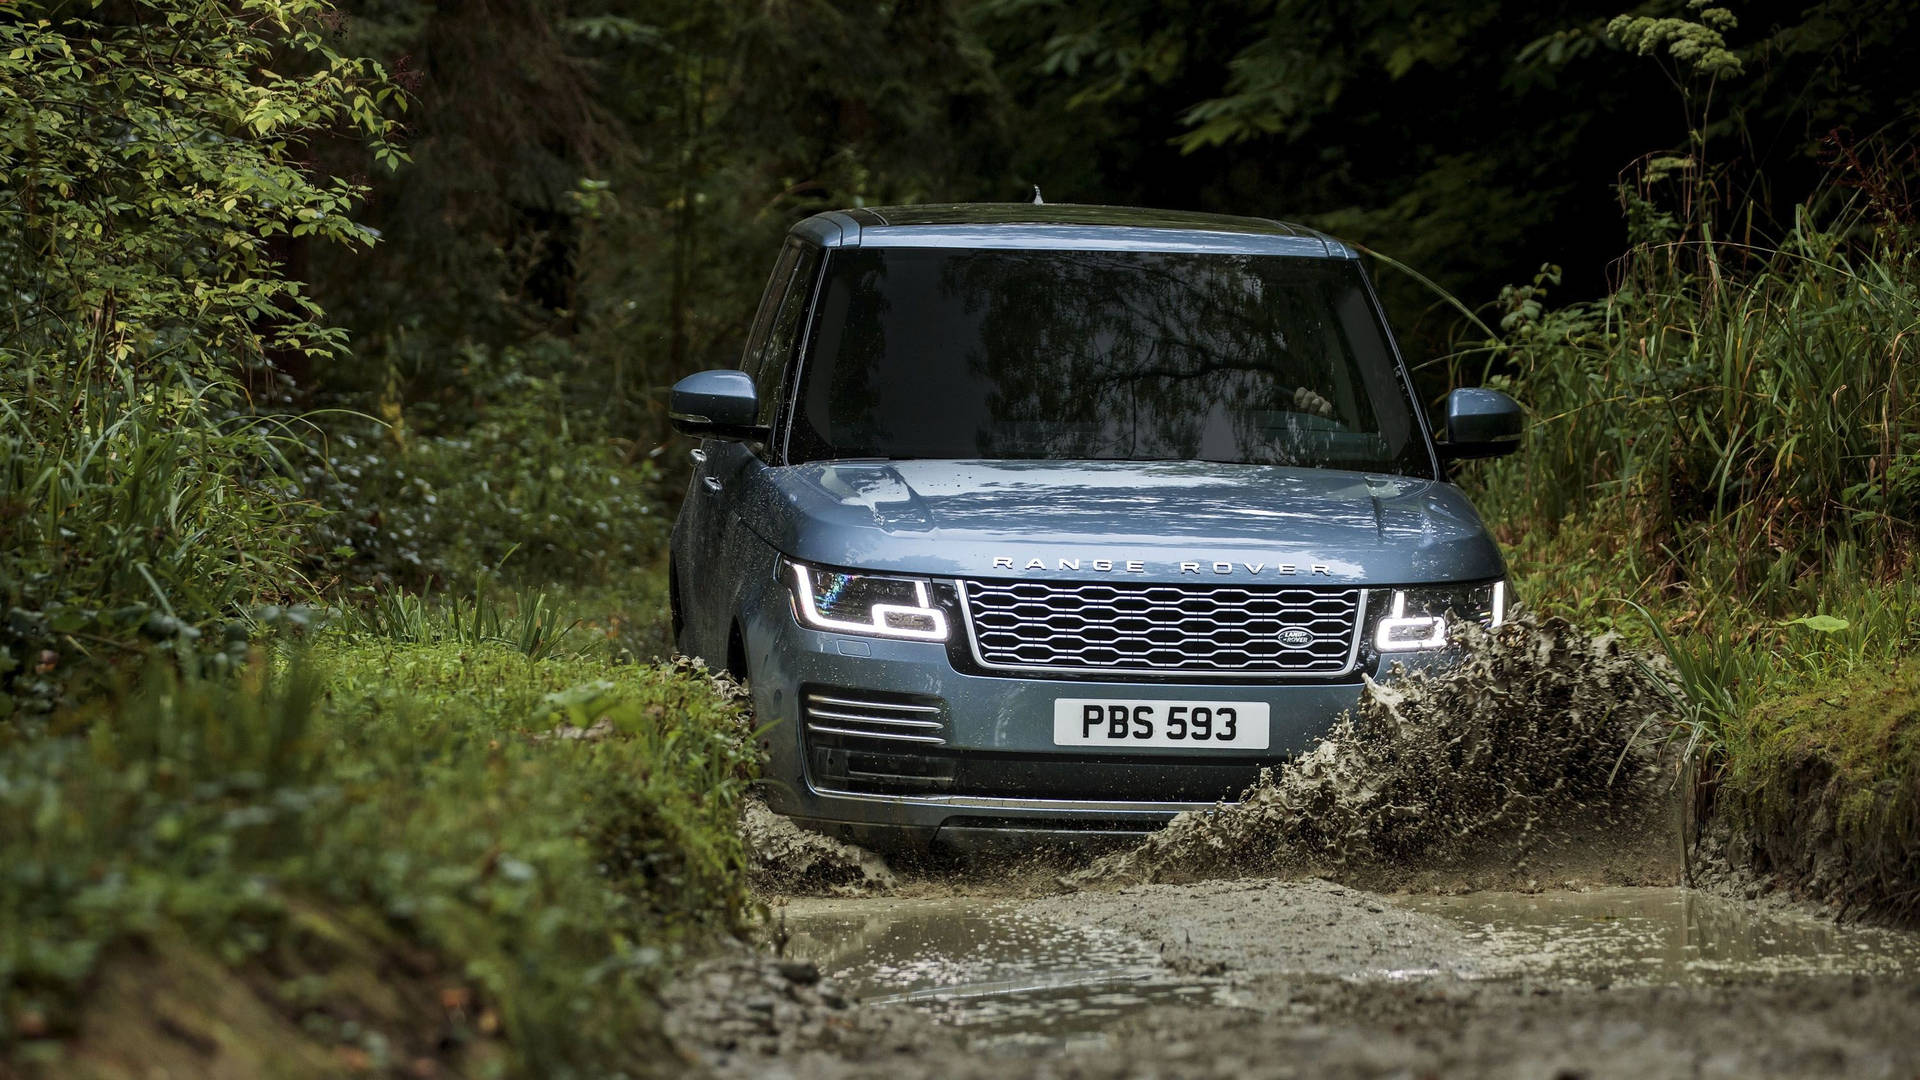 Luxurious adventure awaits in this metallic gray Land Rover Wallpaper